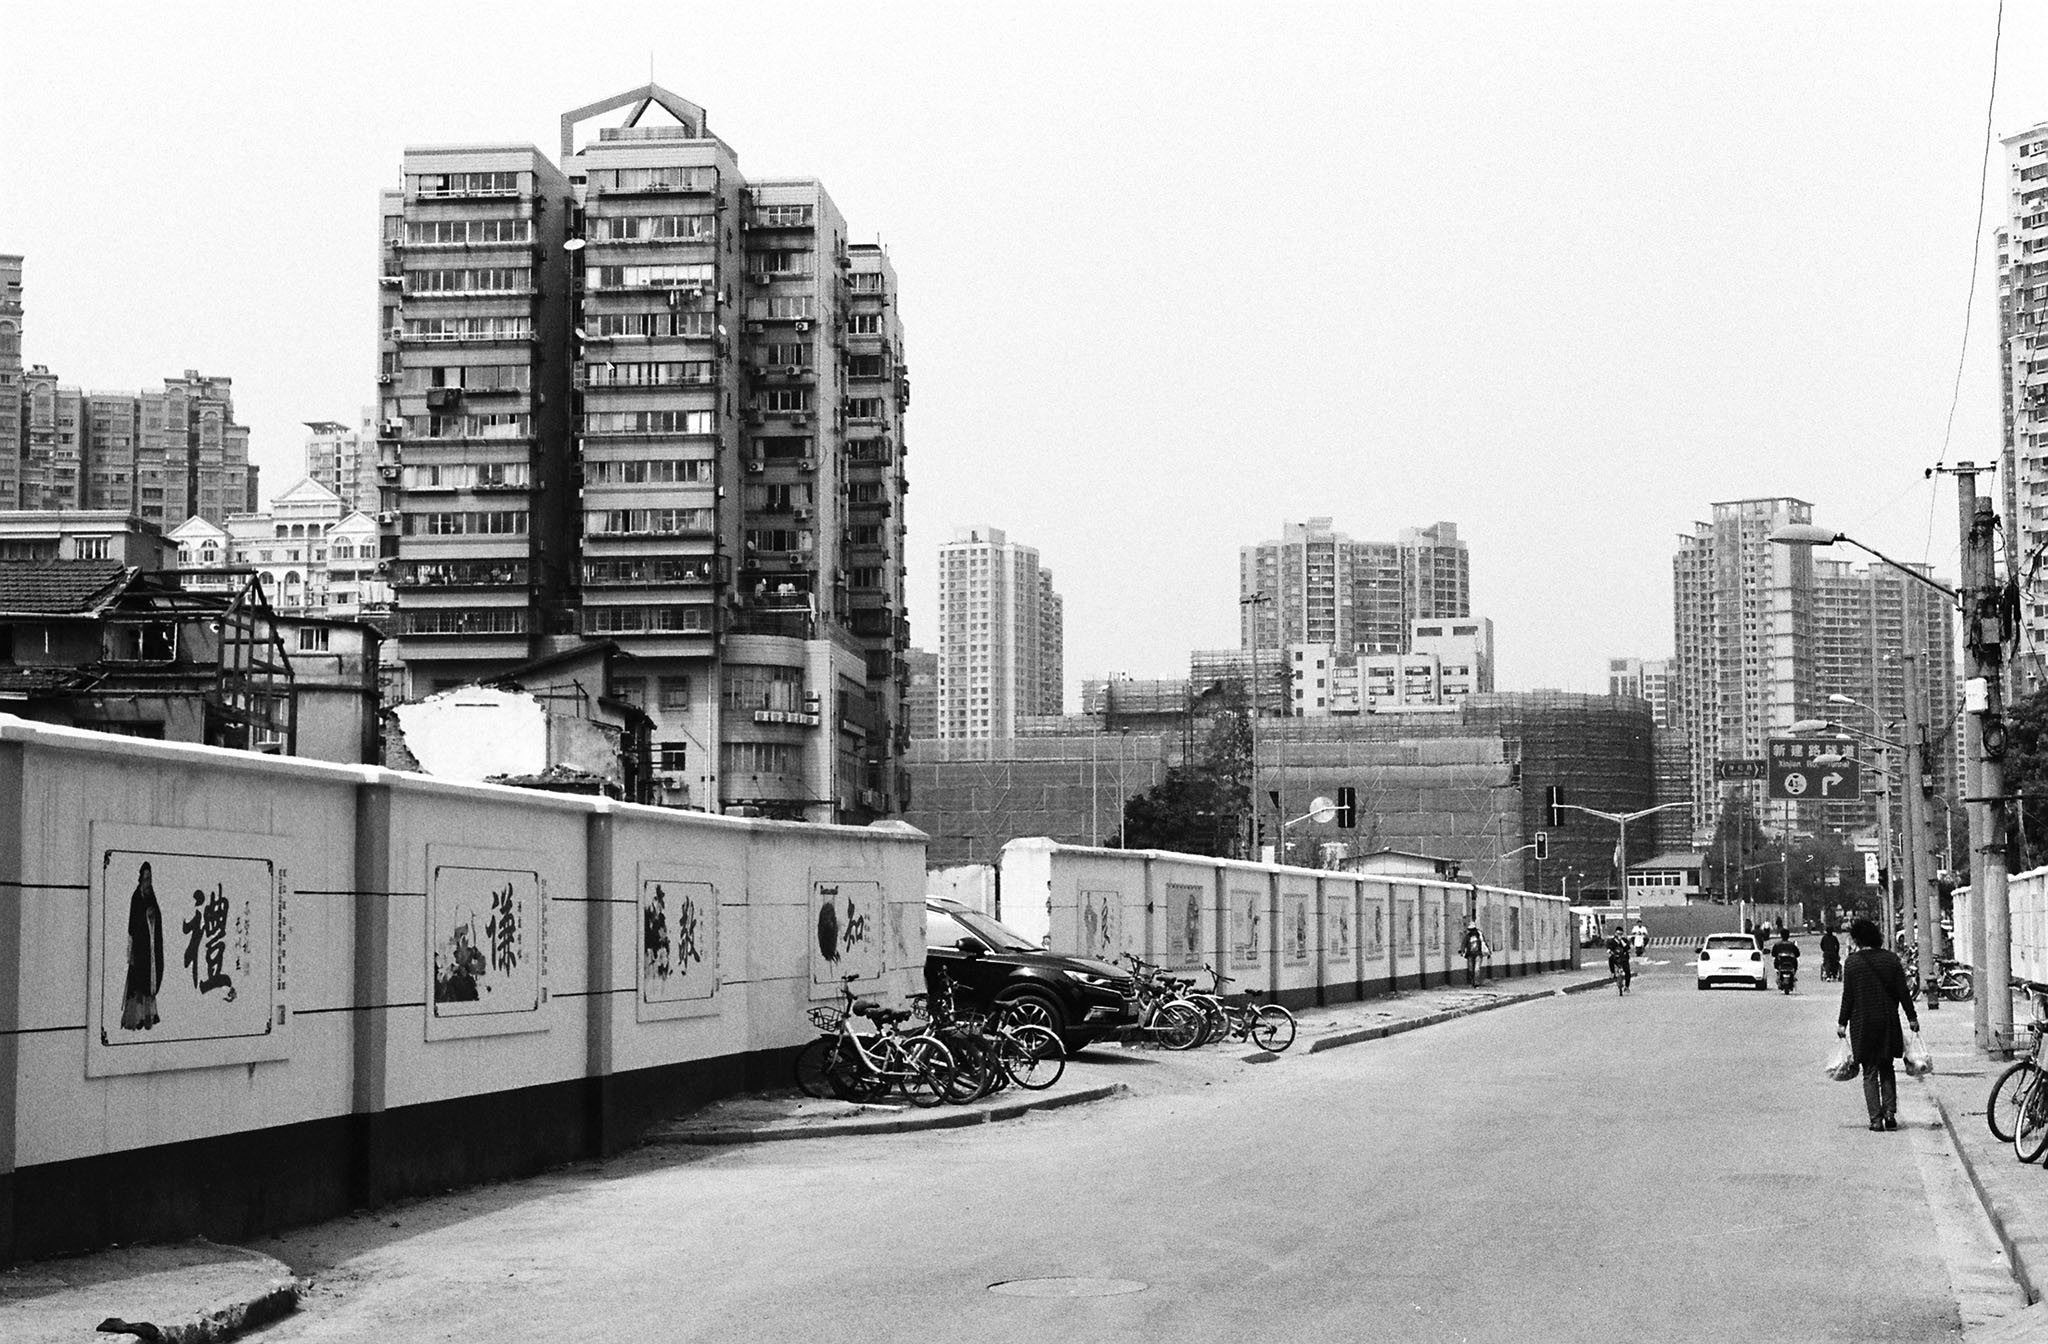 img/1804-china-shanghai-1933-work-nikonf/tat-tso-1804-china-shanghai-1933-work-nikonf-18.jpg